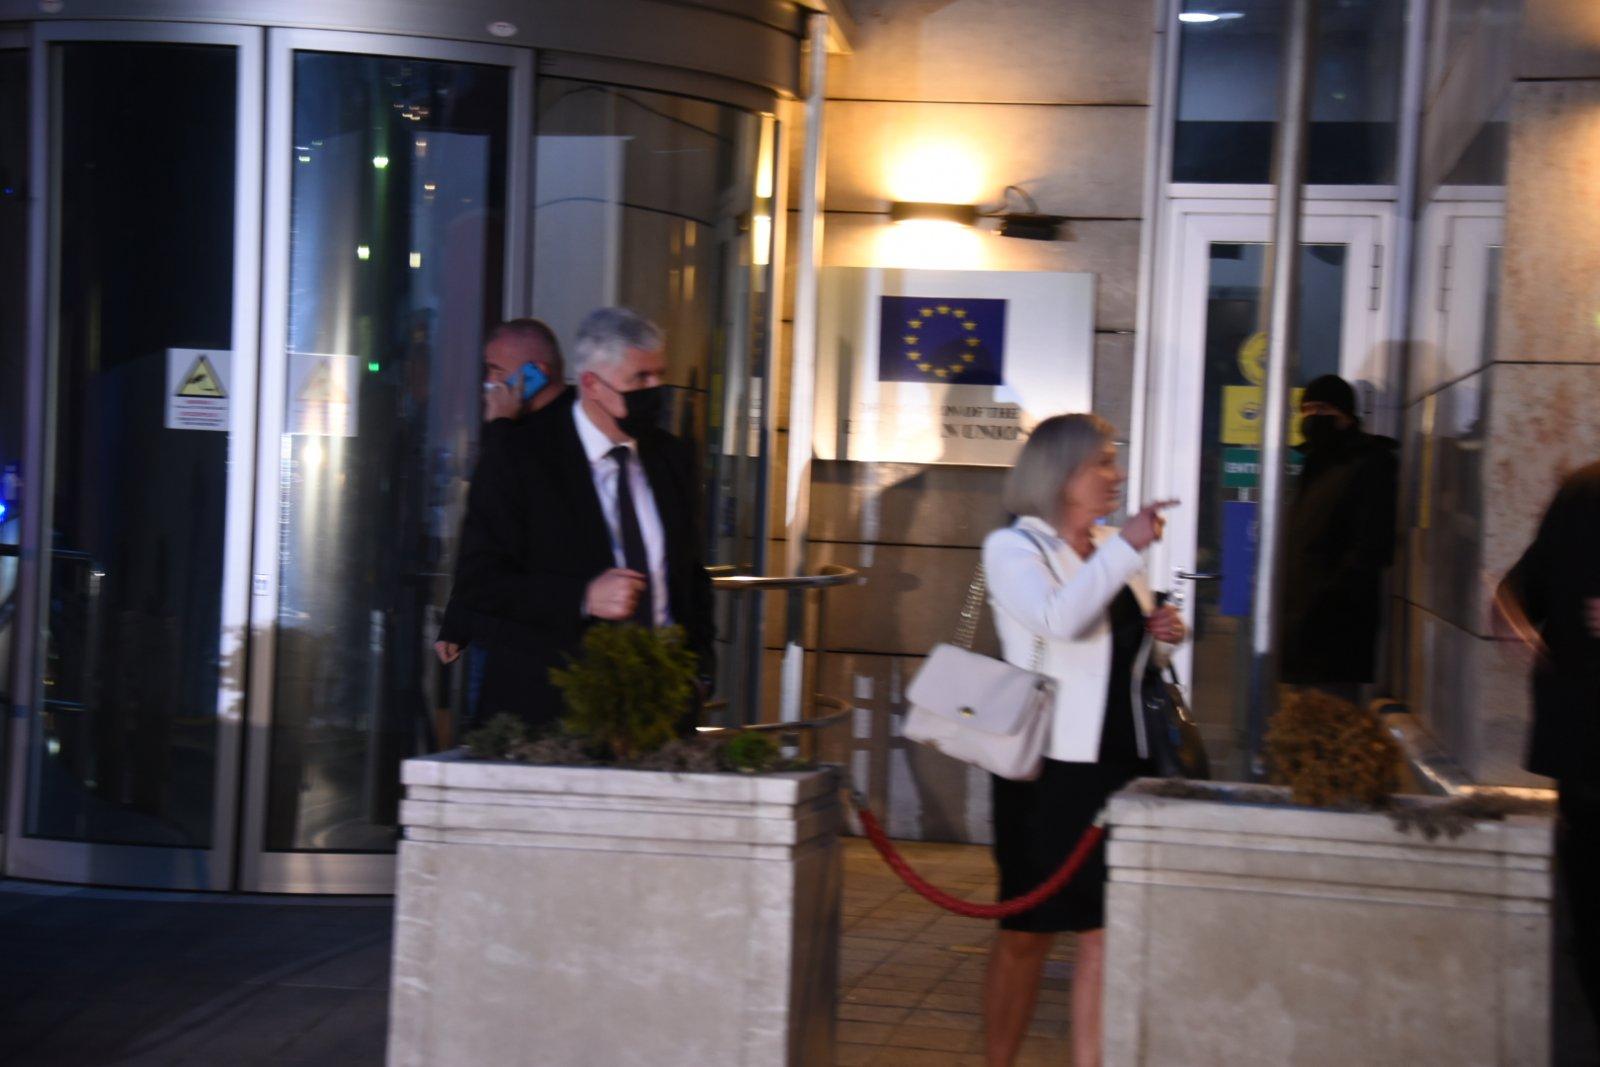 Iznenadni sastanak u zgradi EU Delegacije - Avaz